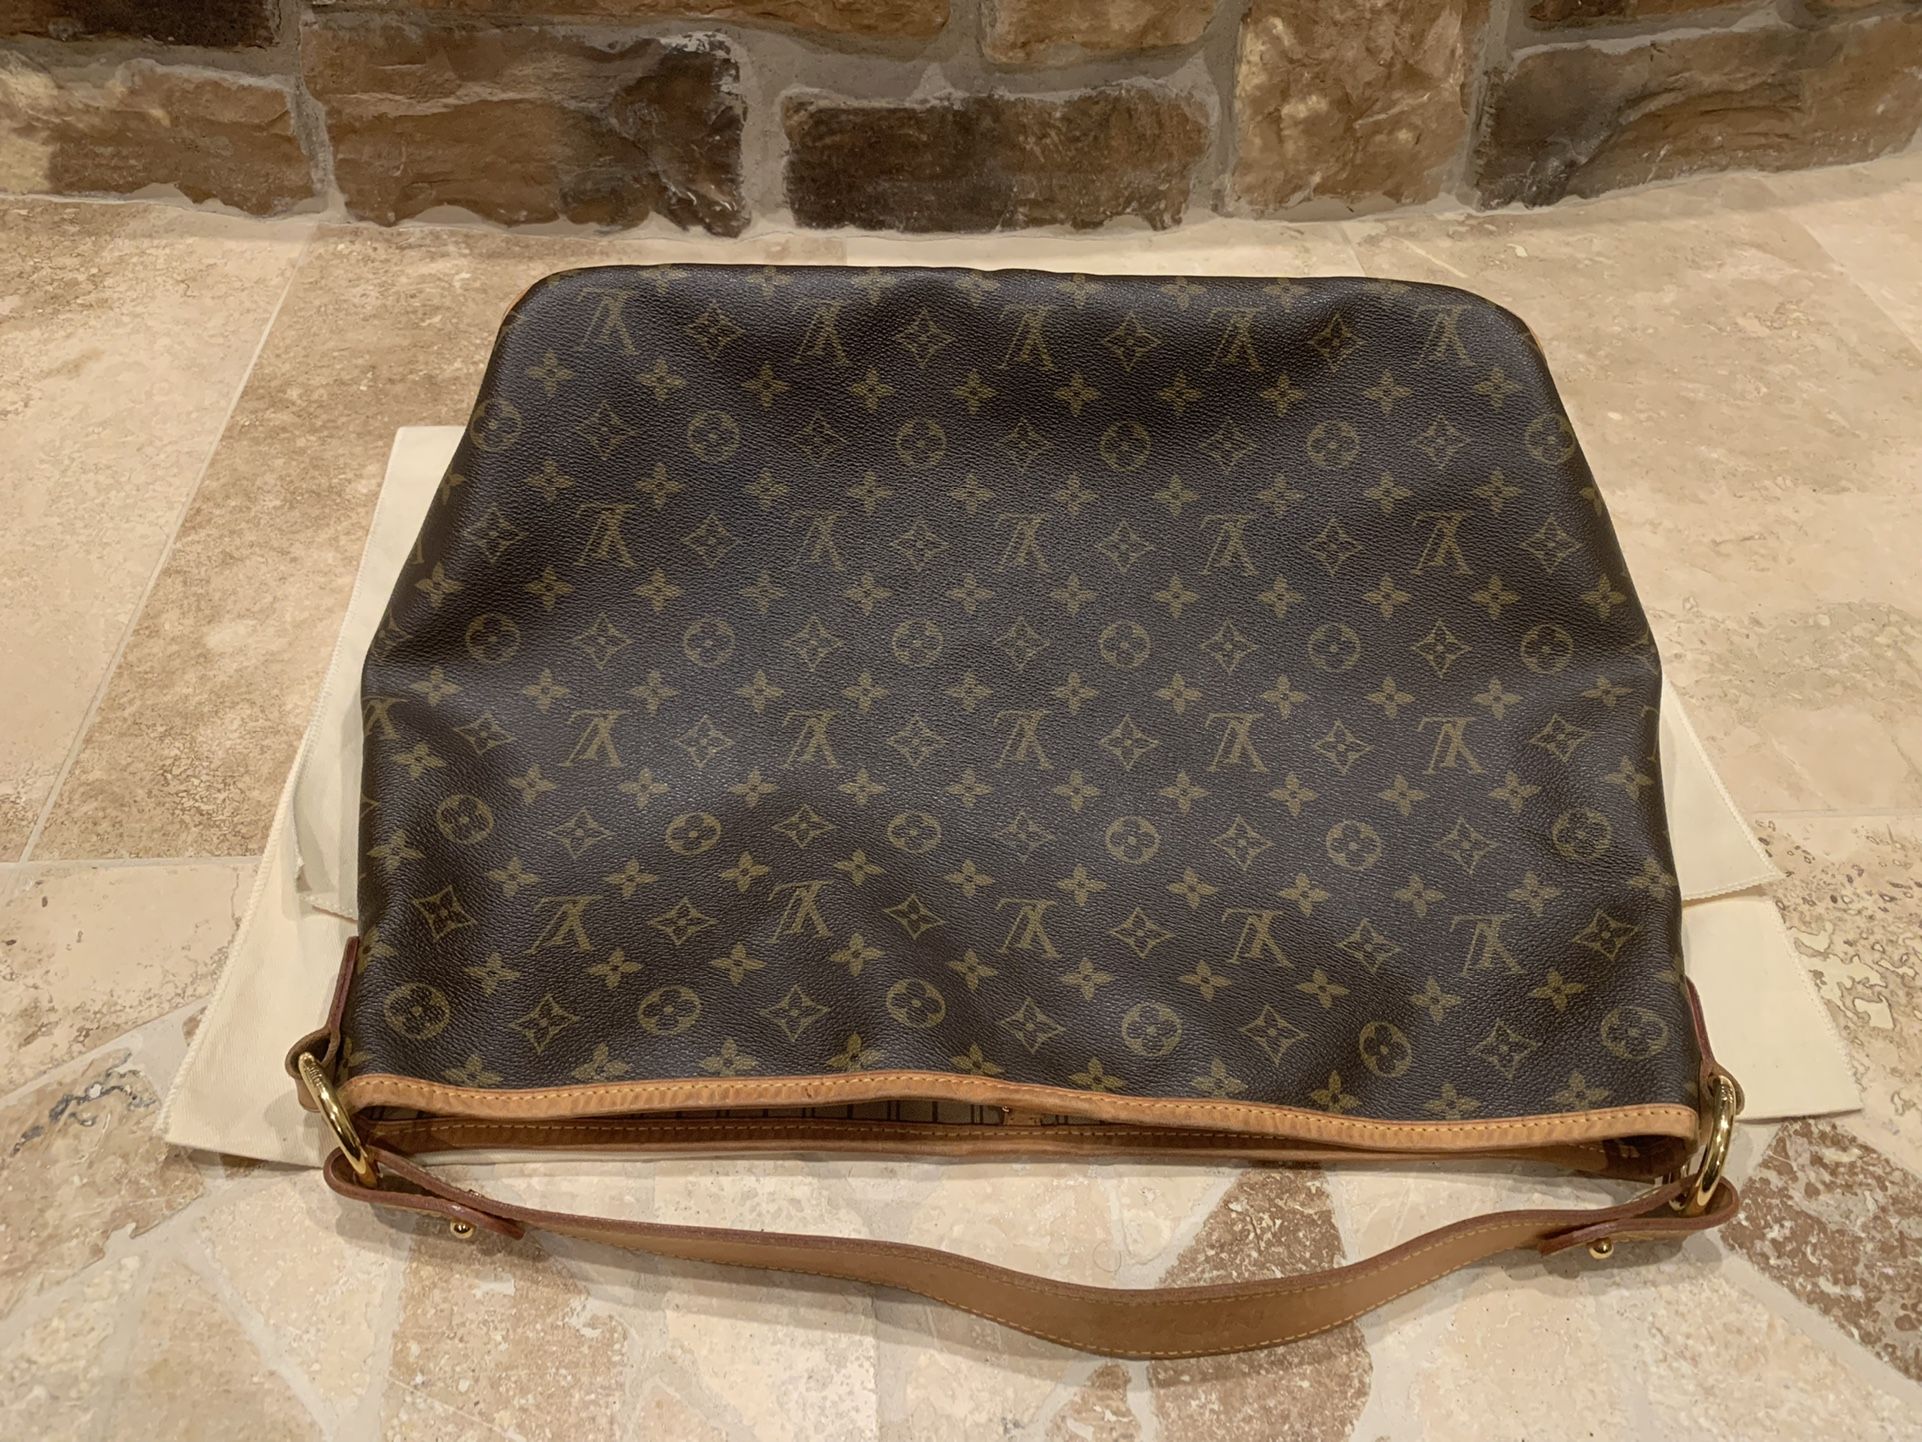 Louis Vuitton, 'Delightful' bag. - Bukowskis